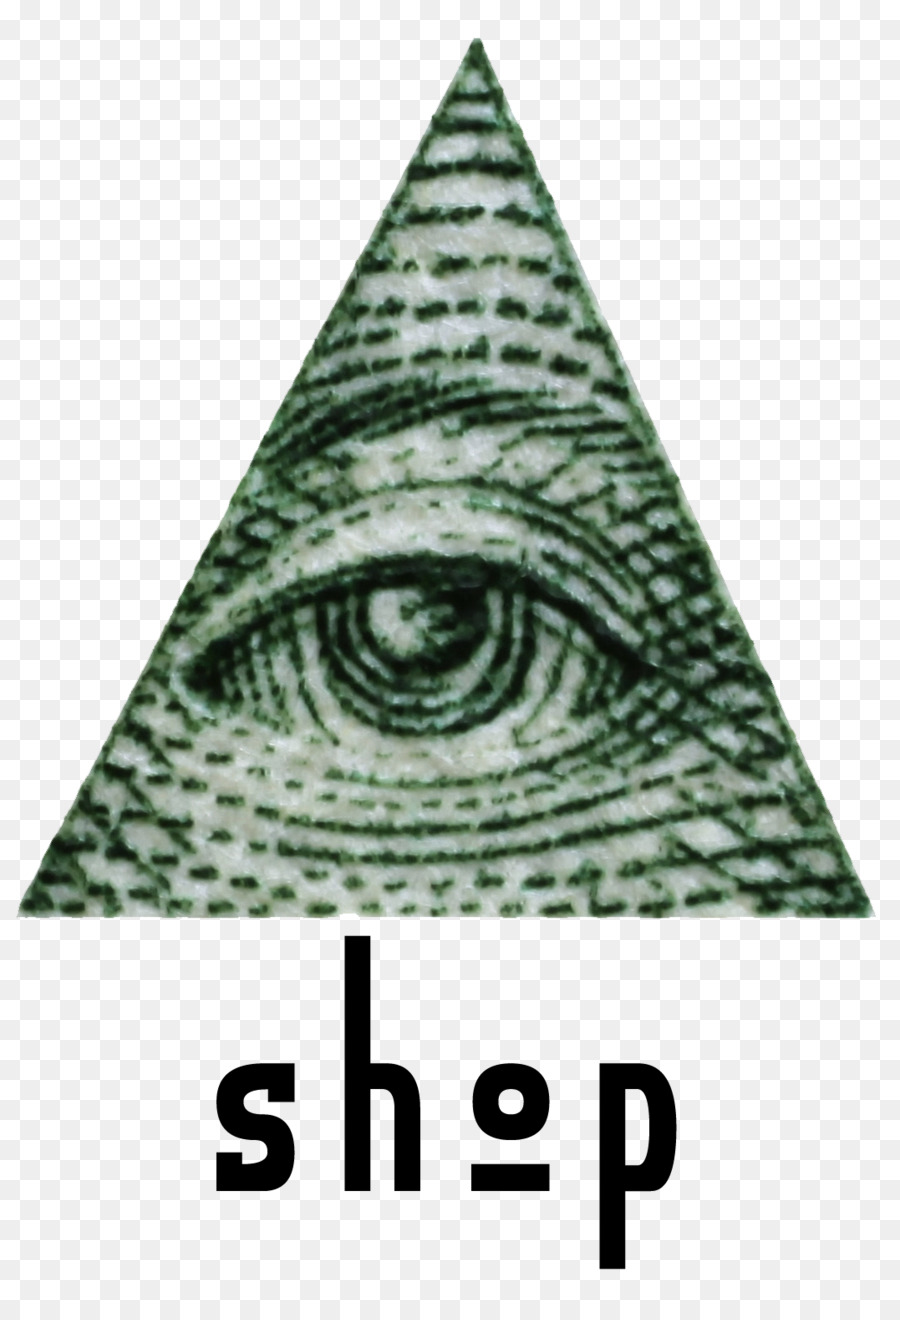 Illuminati Eye of Providence Symbol Computer Icons - symbol png download - 1077*1559 - Free Transparent Illuminati png Download.